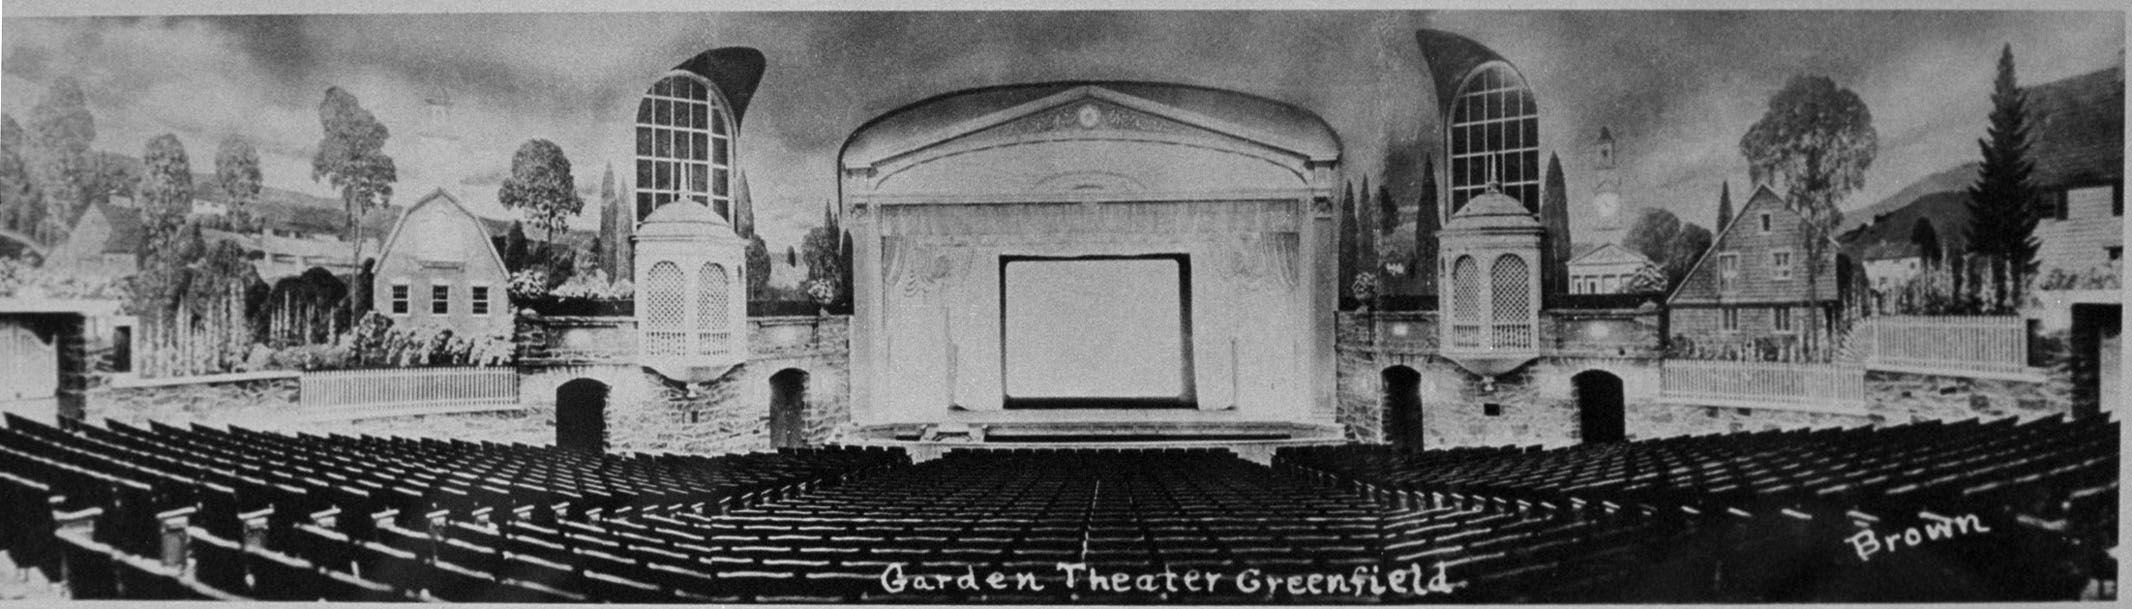 Saving The Garden Movie House In Greenfield The Boston Globe